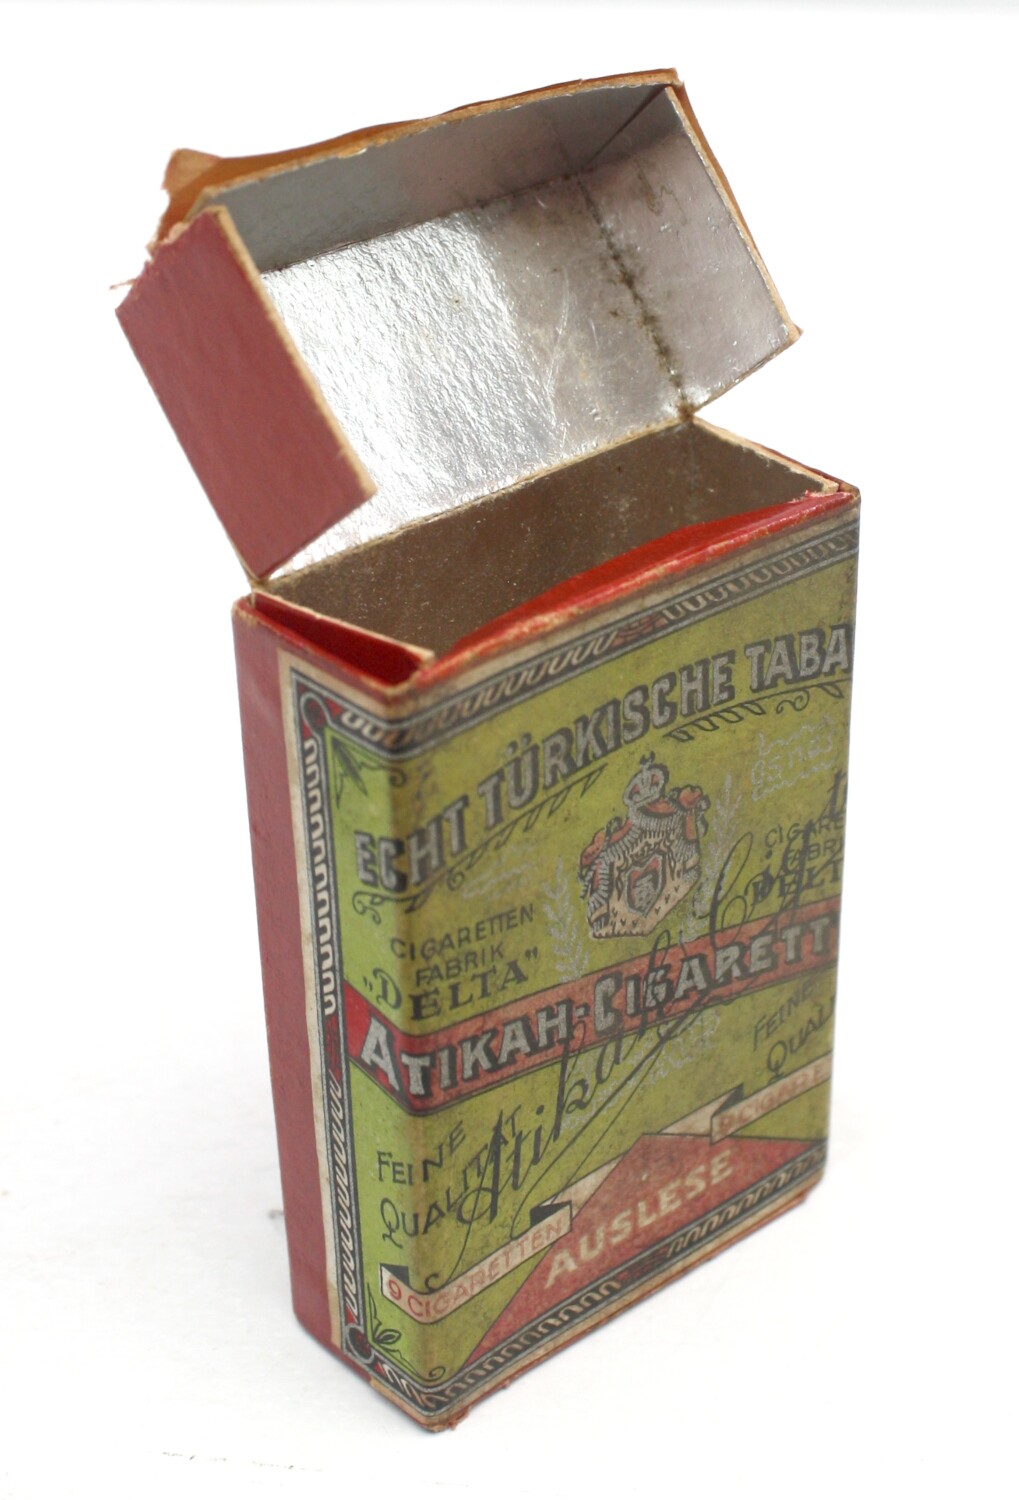 Zigarettenschachtel: Atikah Cigaretten (Drilandmuseum CC BY-NC-SA)